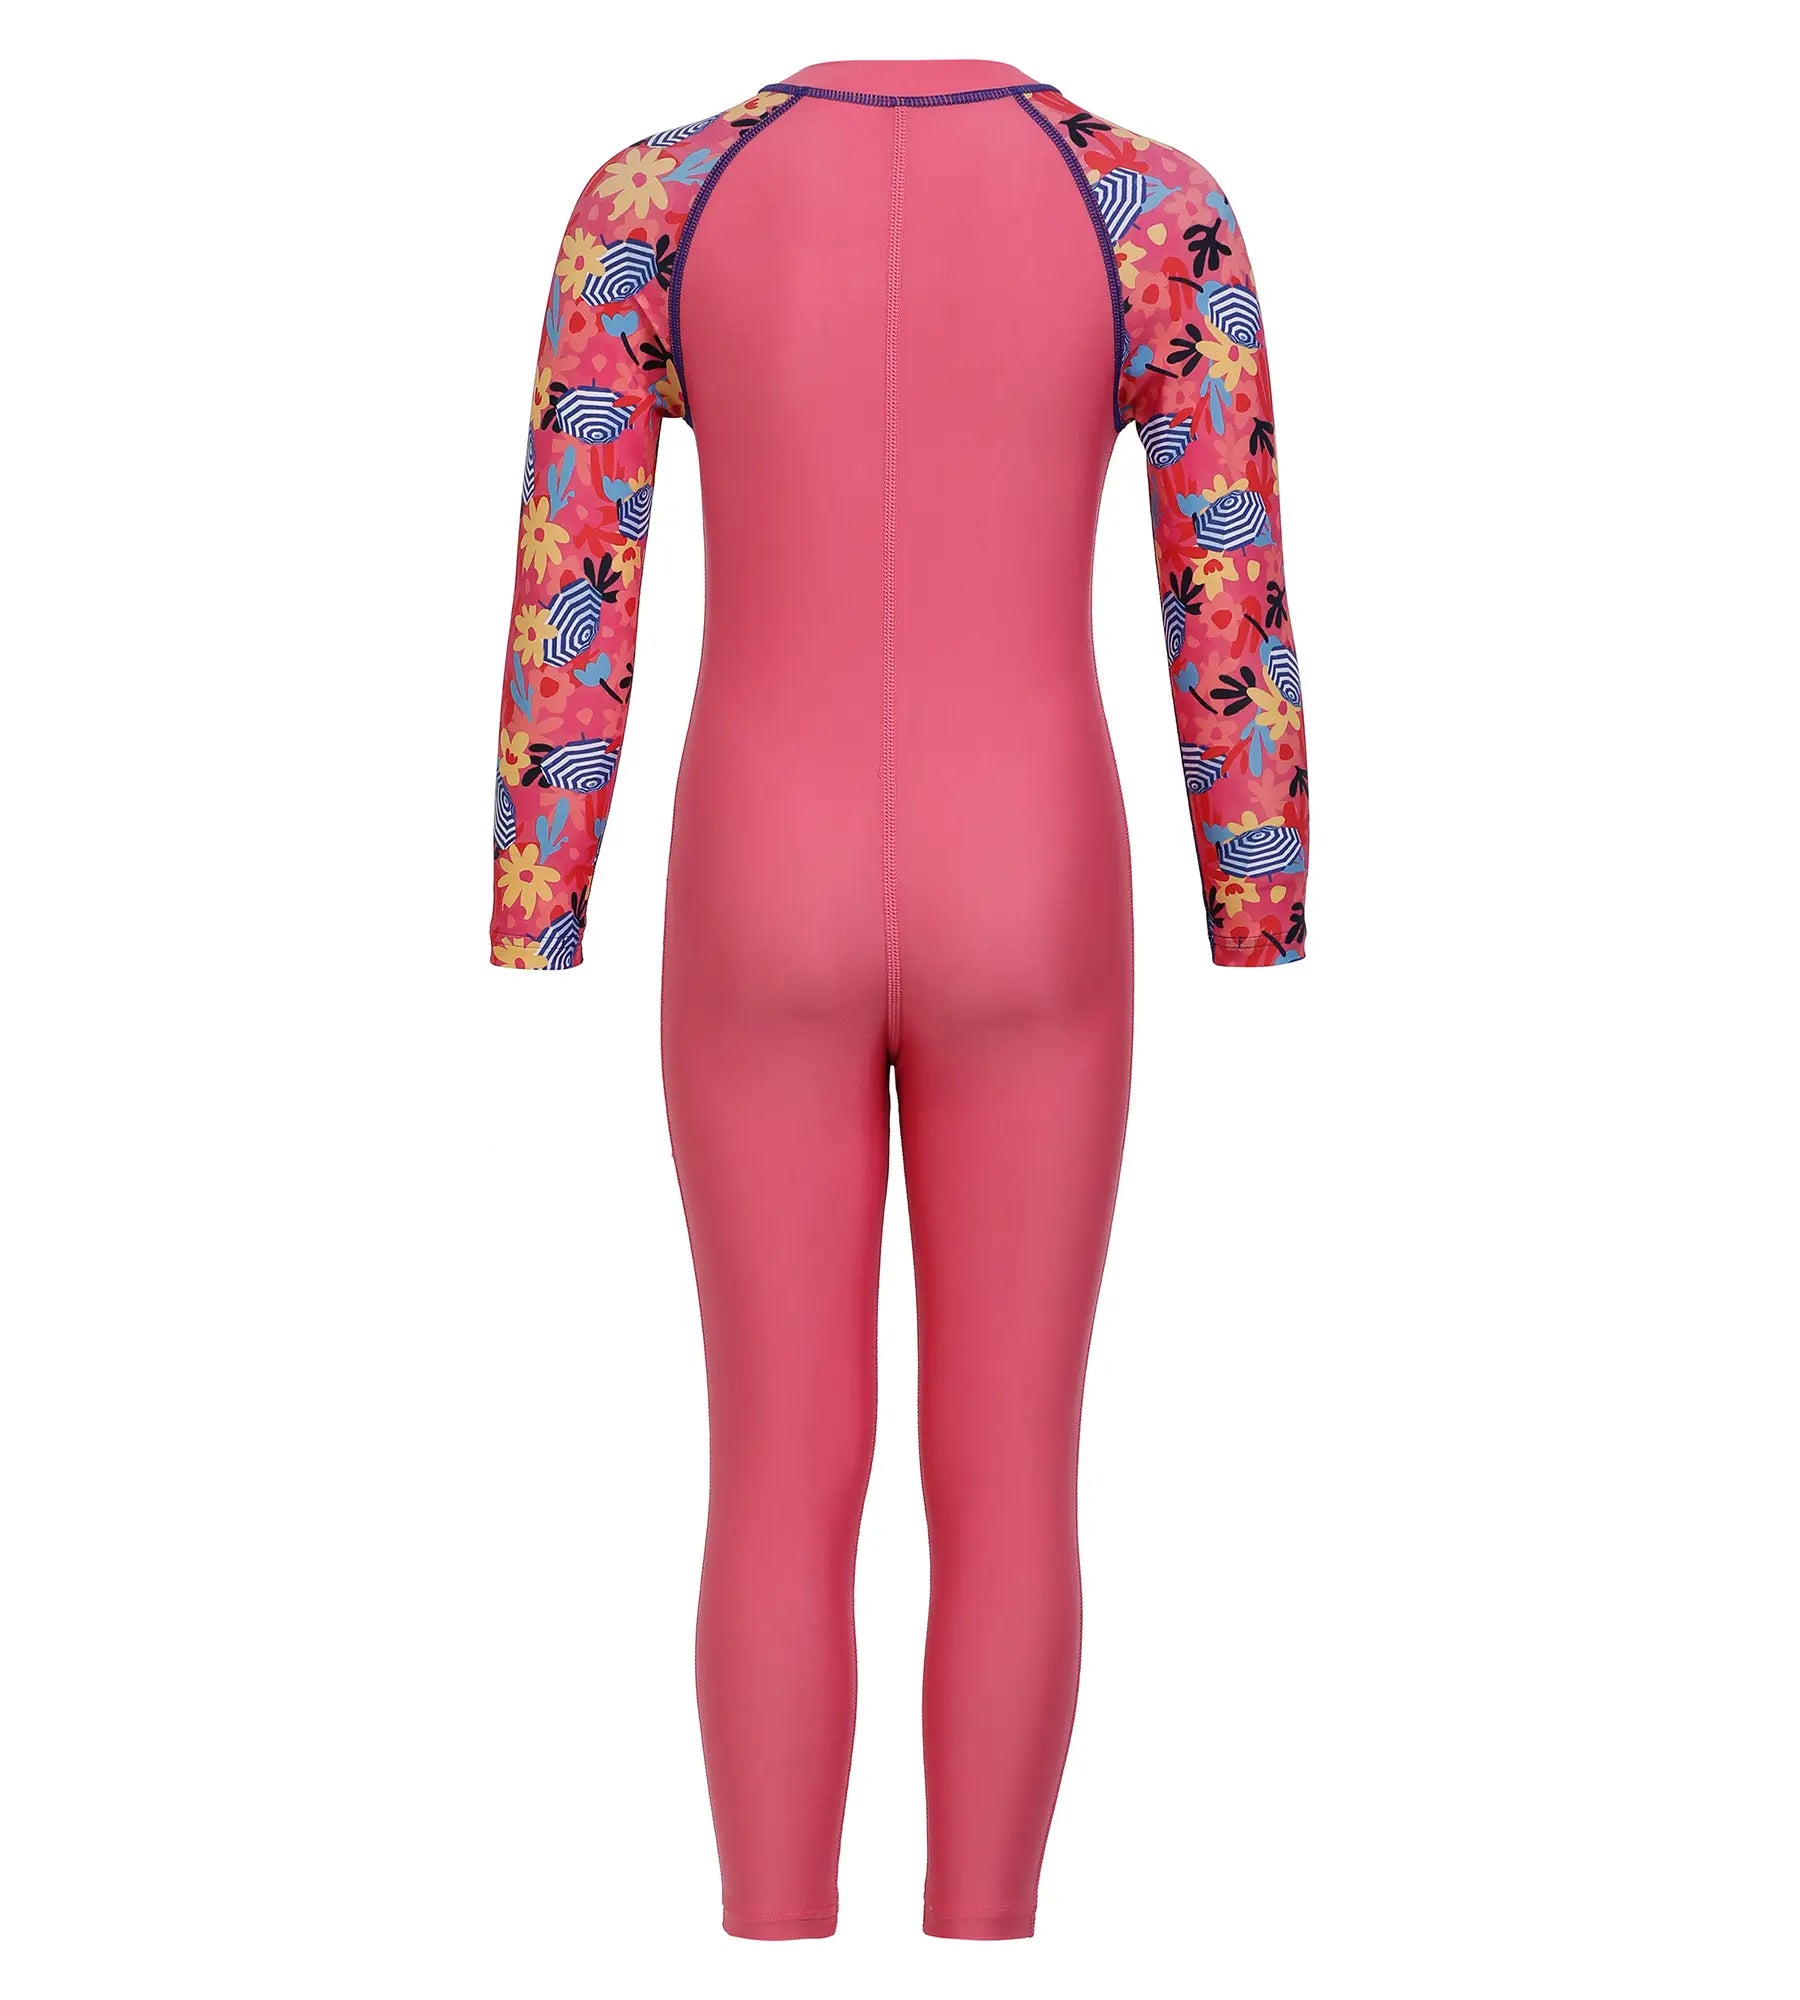 Tots Unisex All In One Full Body Suit - Fandango Pink & Bloominous_4